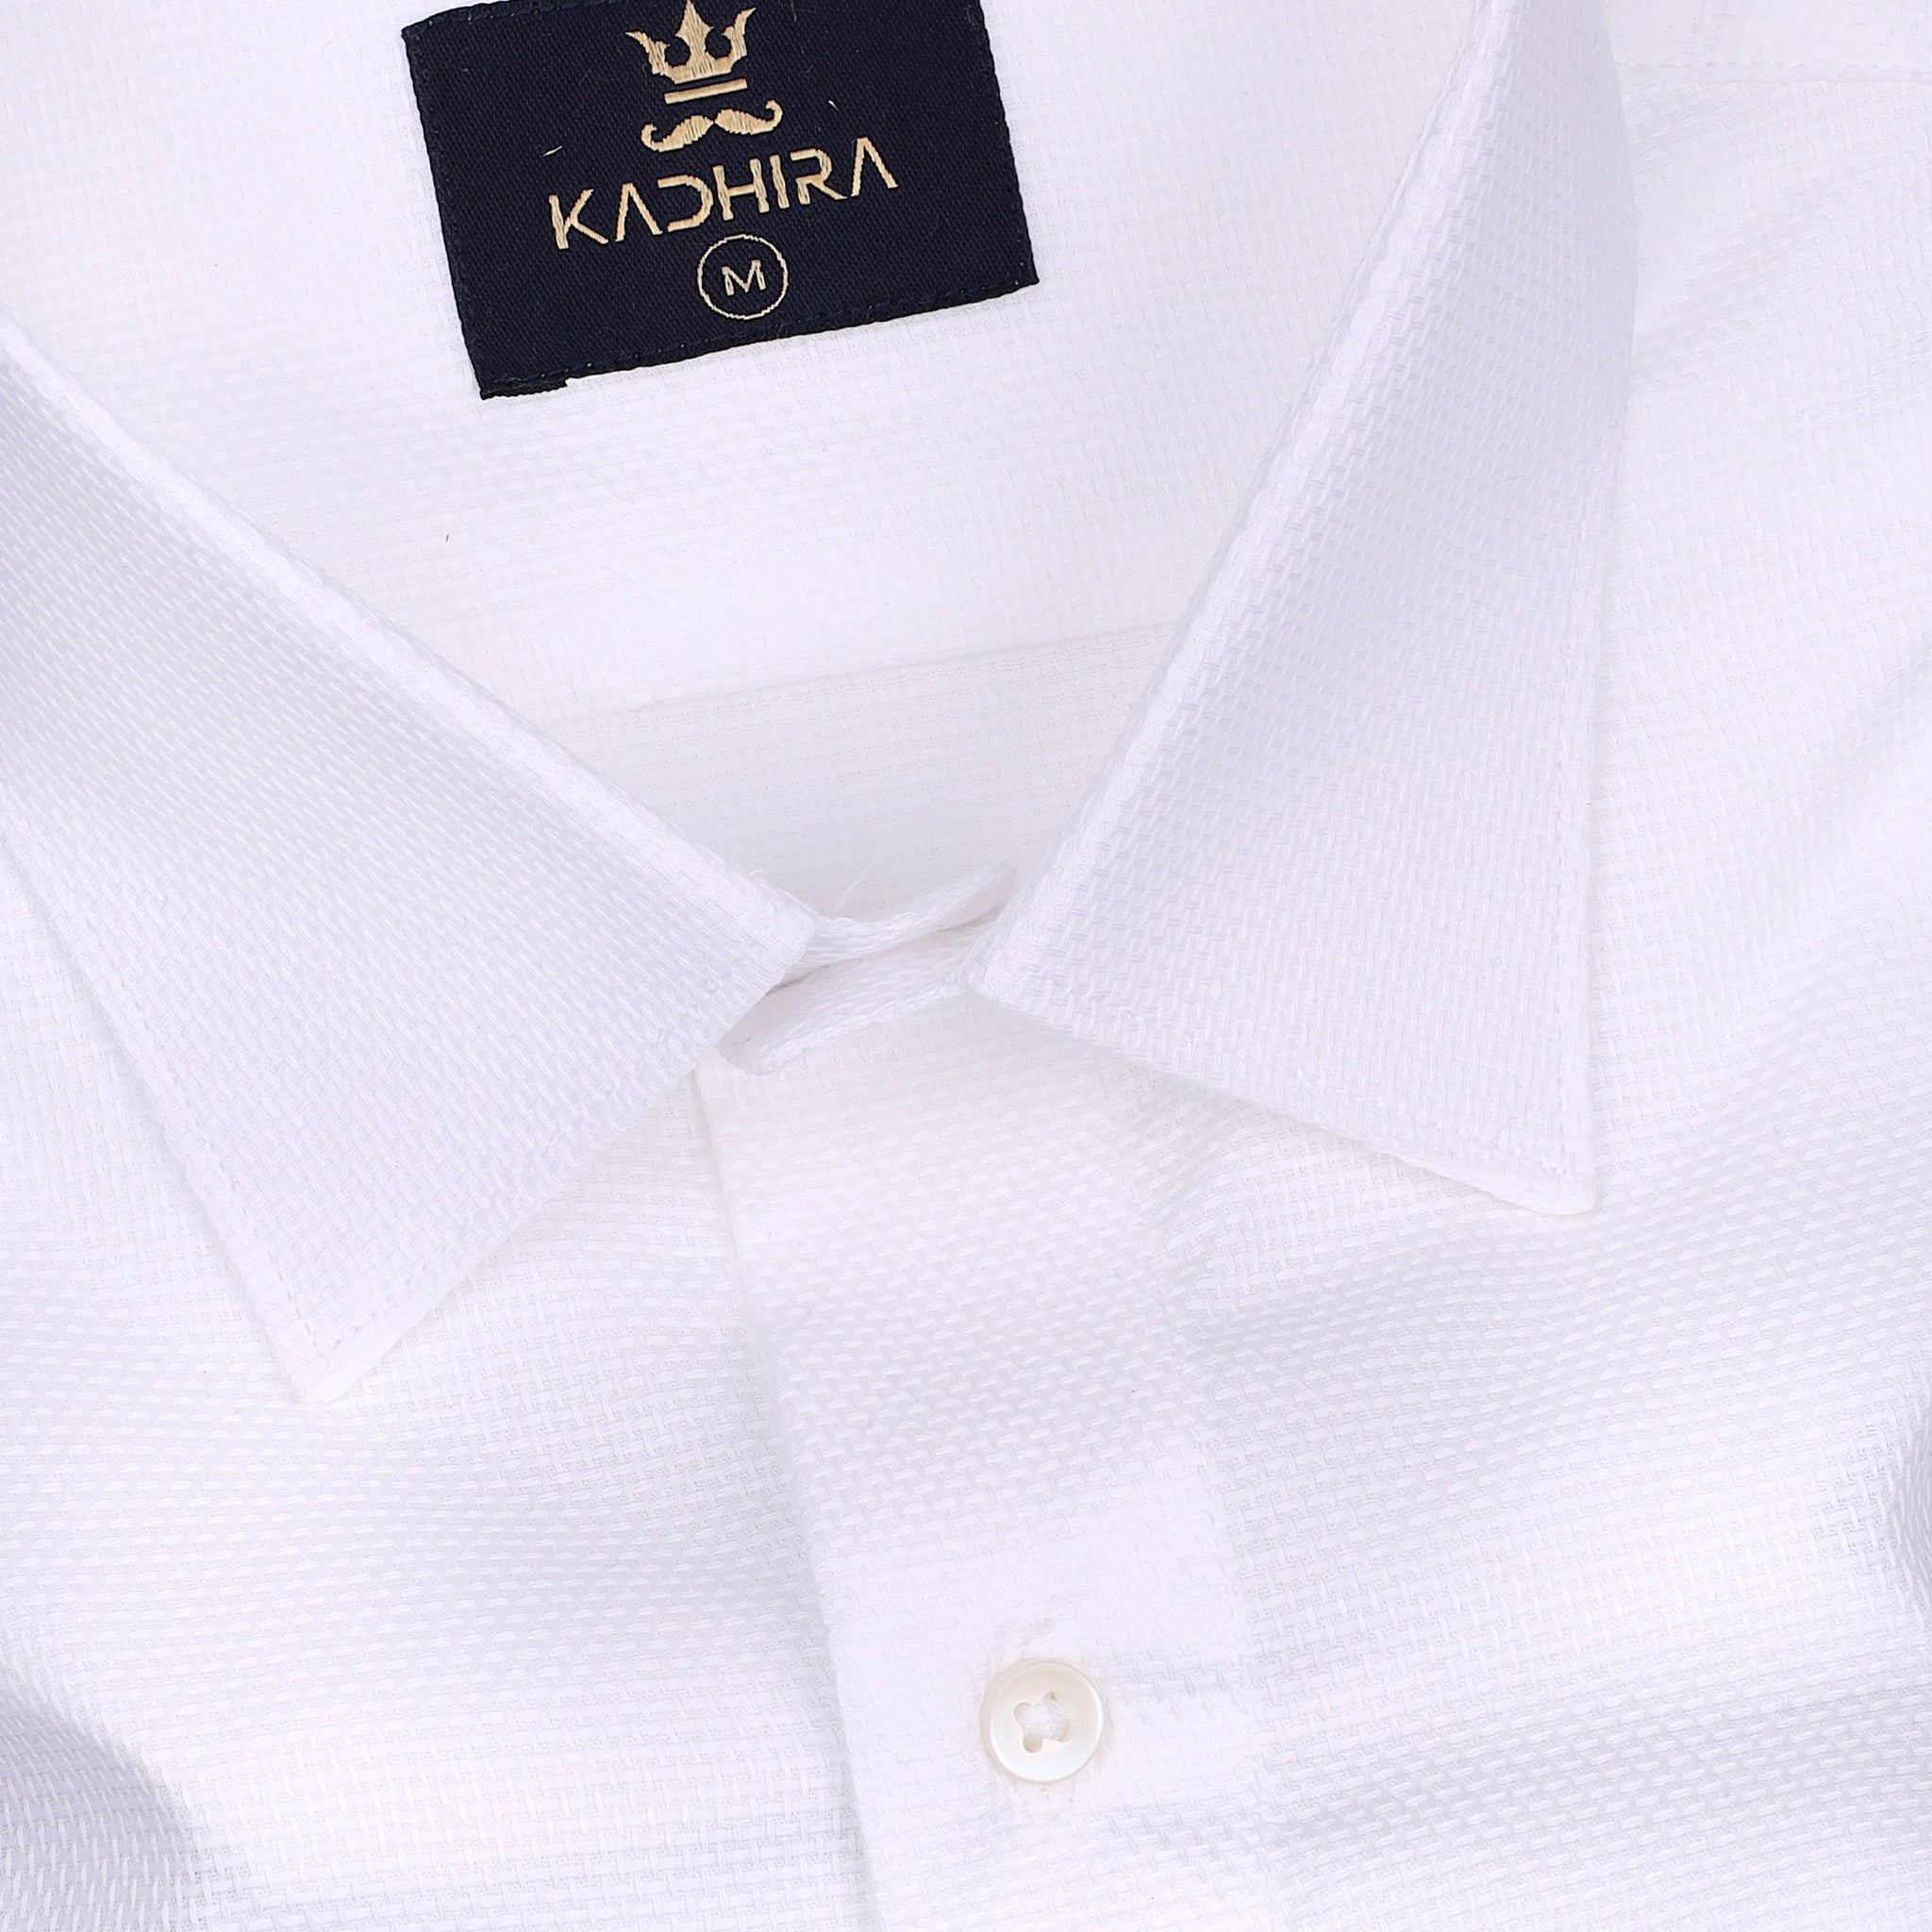 Bright White Dobby Textured Royal Cotton Shirt